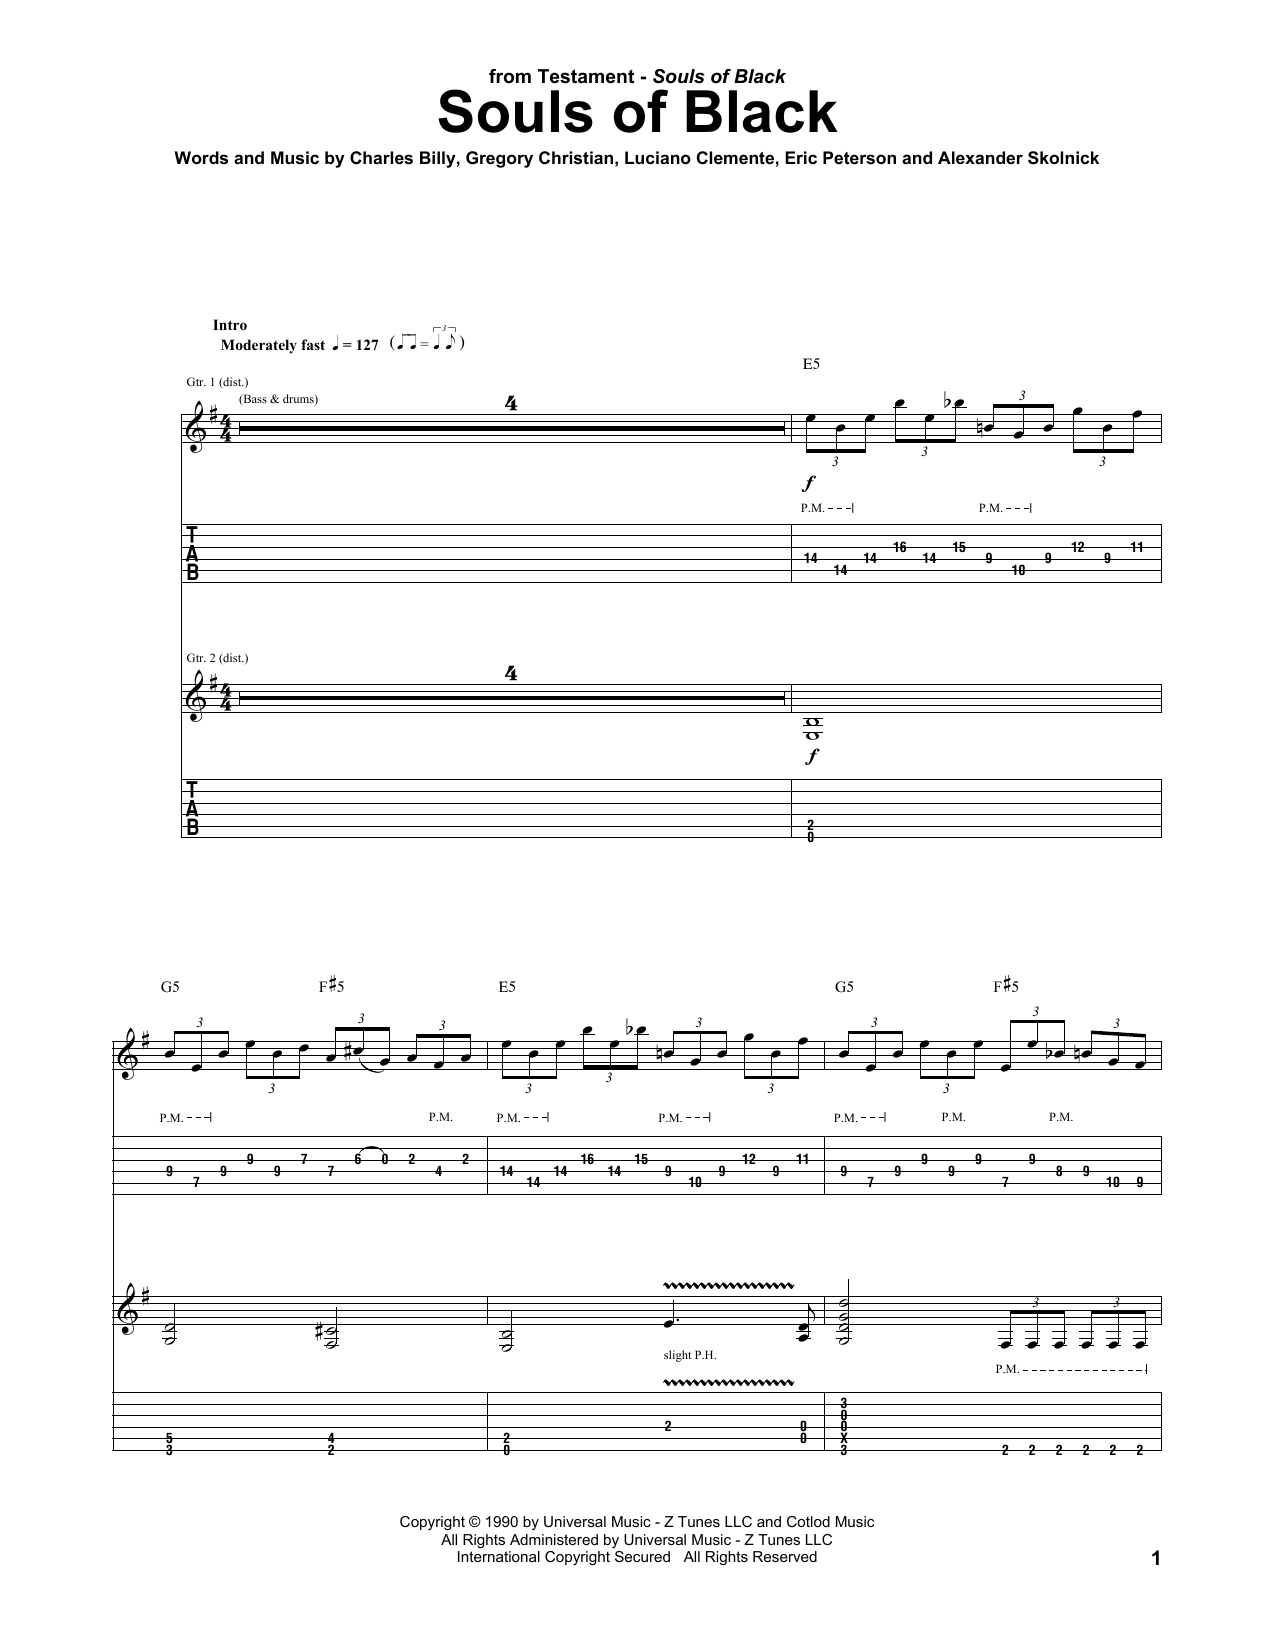 Testament Souls Of Black Sheet Music Notes & Chords for Guitar Tab - Download or Print PDF